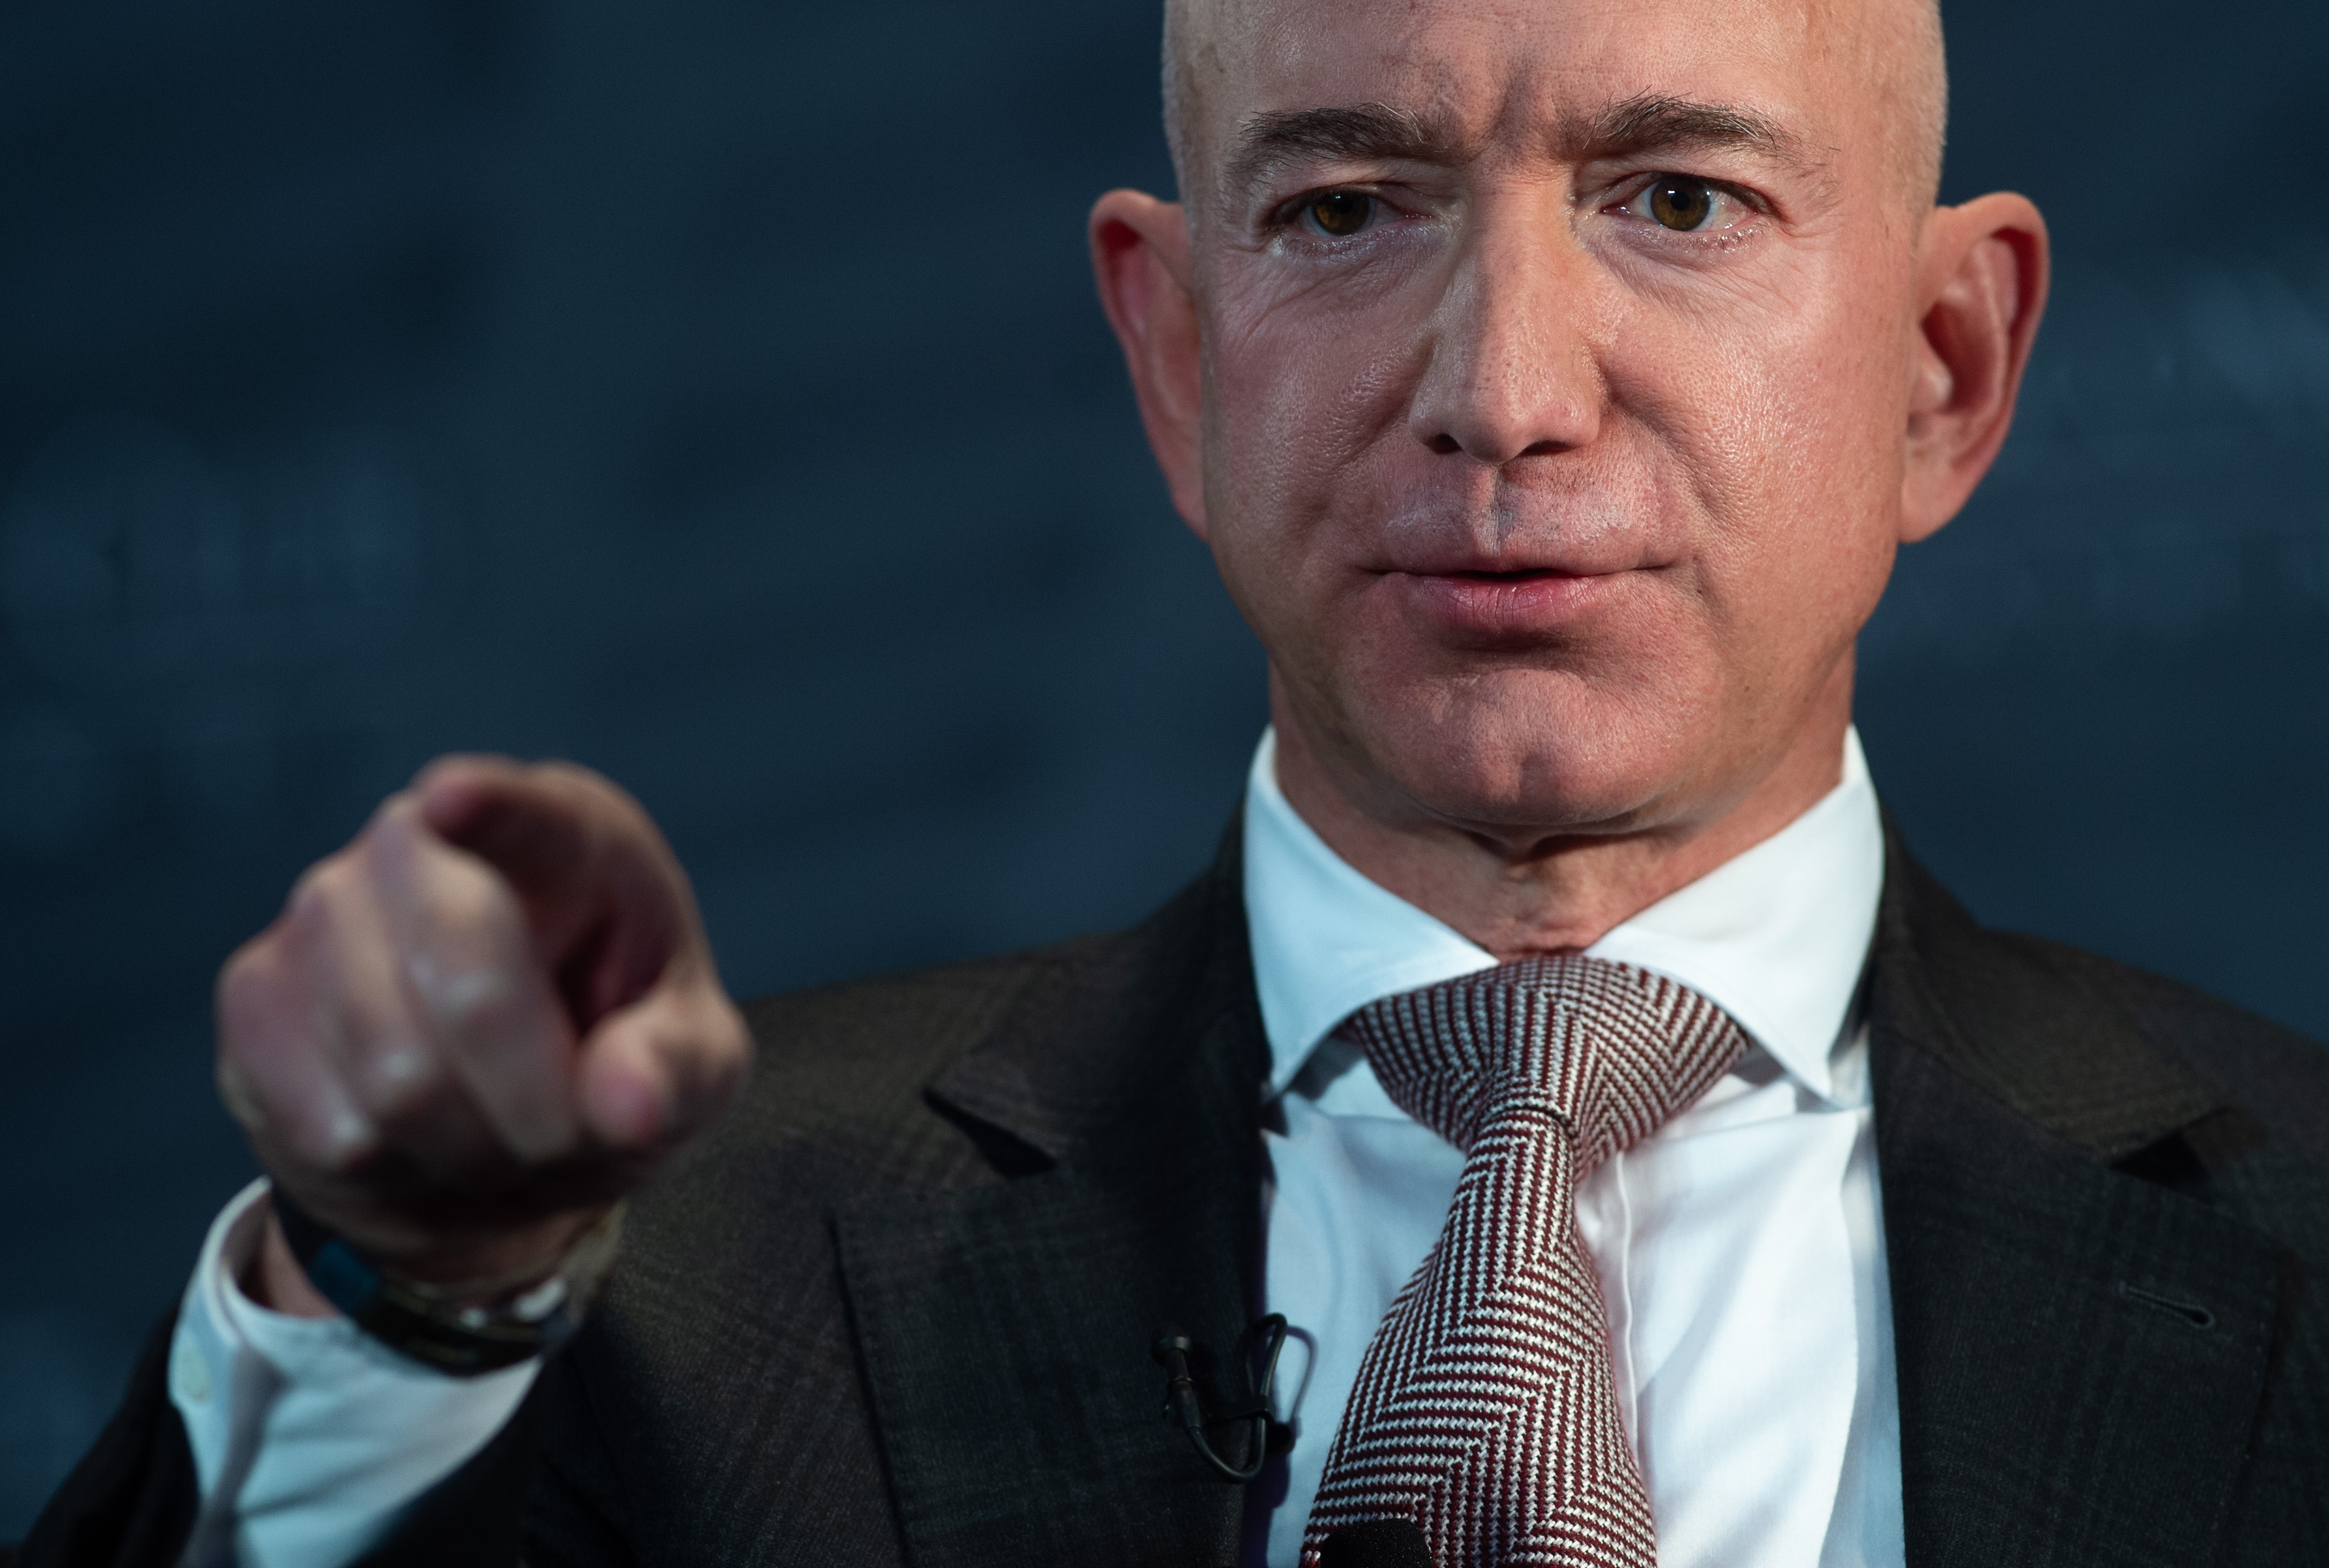 Jeff Bezos, founder and CEO of Amazon, speaks during the Economic Club of Washington's Milestone Celebration event in Washington, D.C., on September 13, 2018. (Saul Loeb&mdash;AFP/Getty Images)